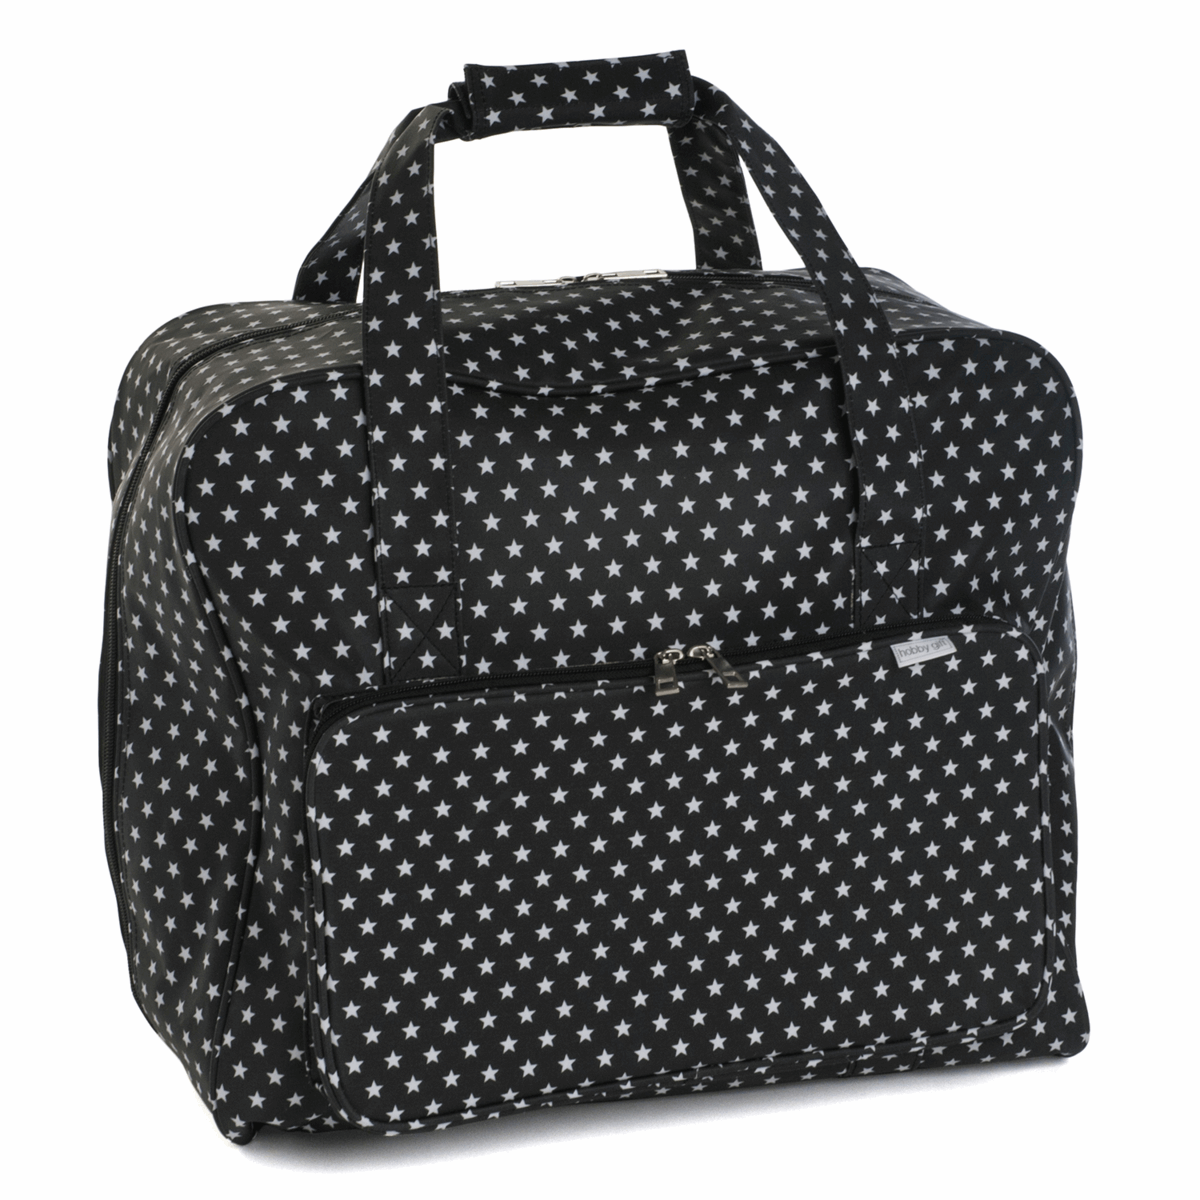 Special Buy Bag Offer - Black Star Sewing Machine Bag (Matt PVC)